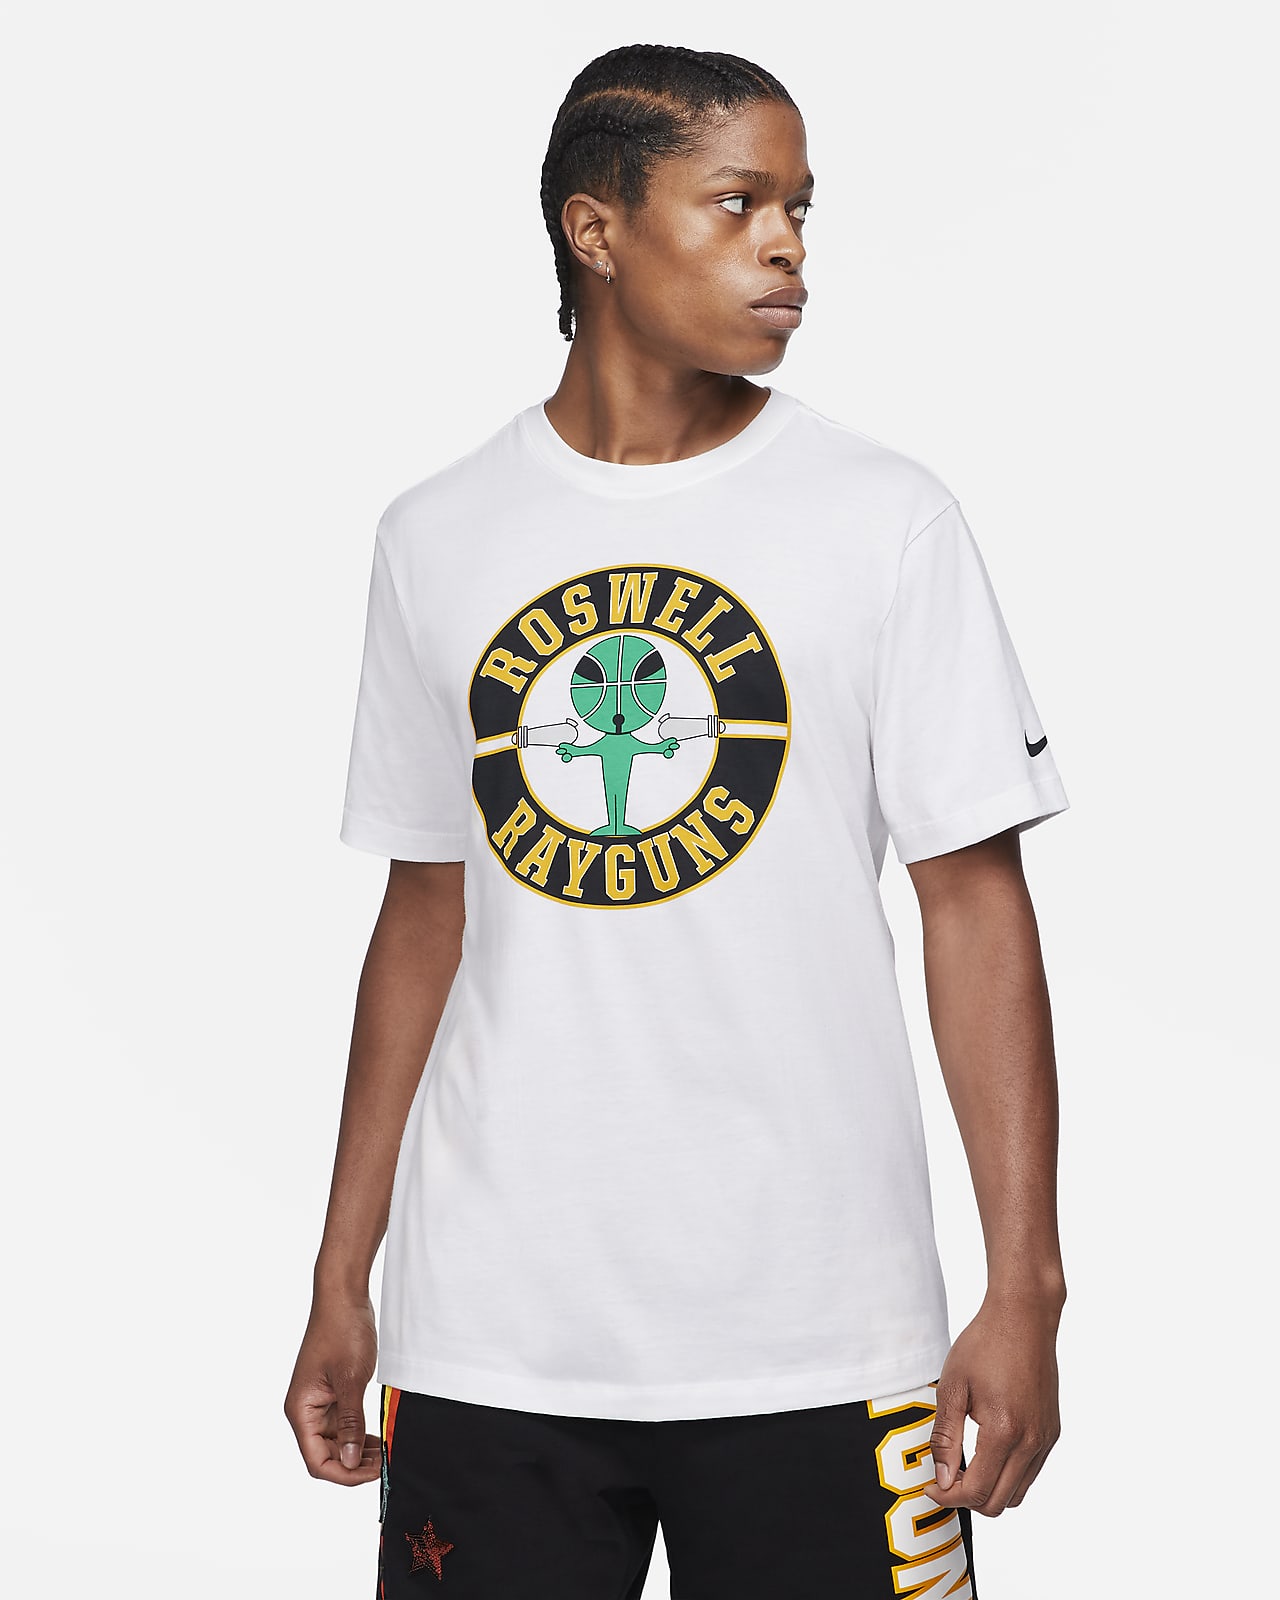 Nike Rayguns Men's Basketball T-Shirt 